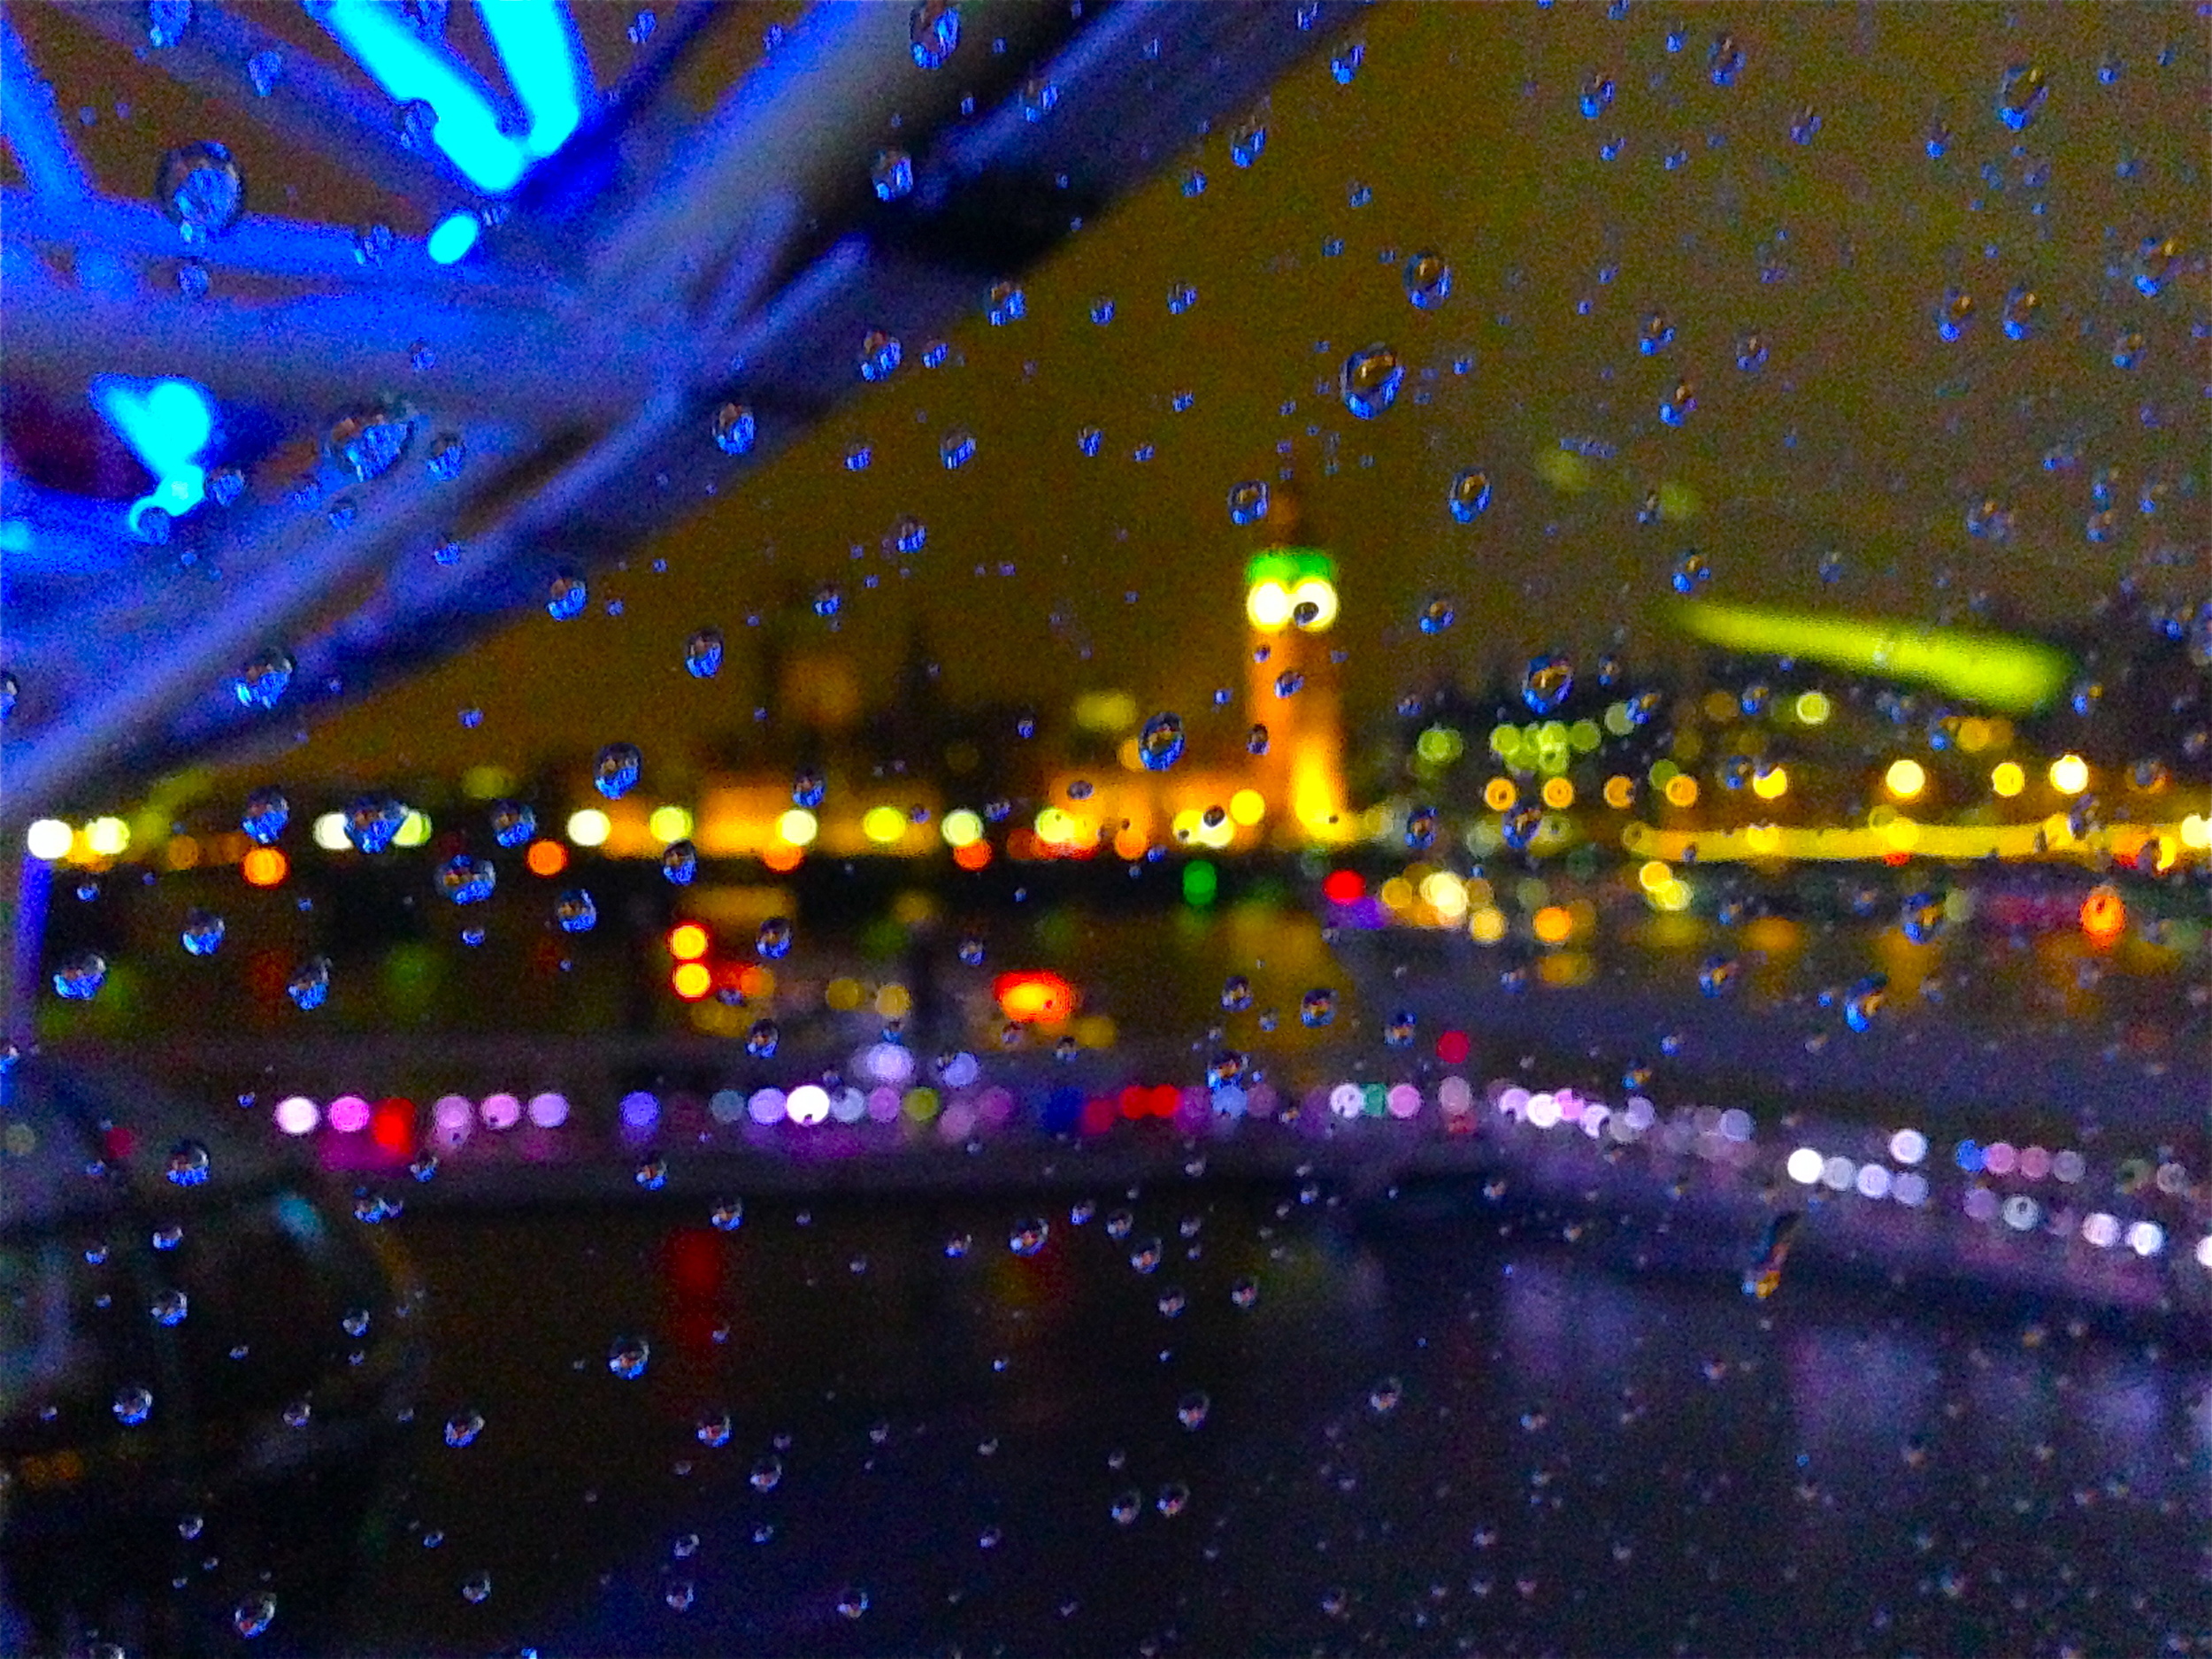 Kaci Nicole - Rainy View from the London Eye